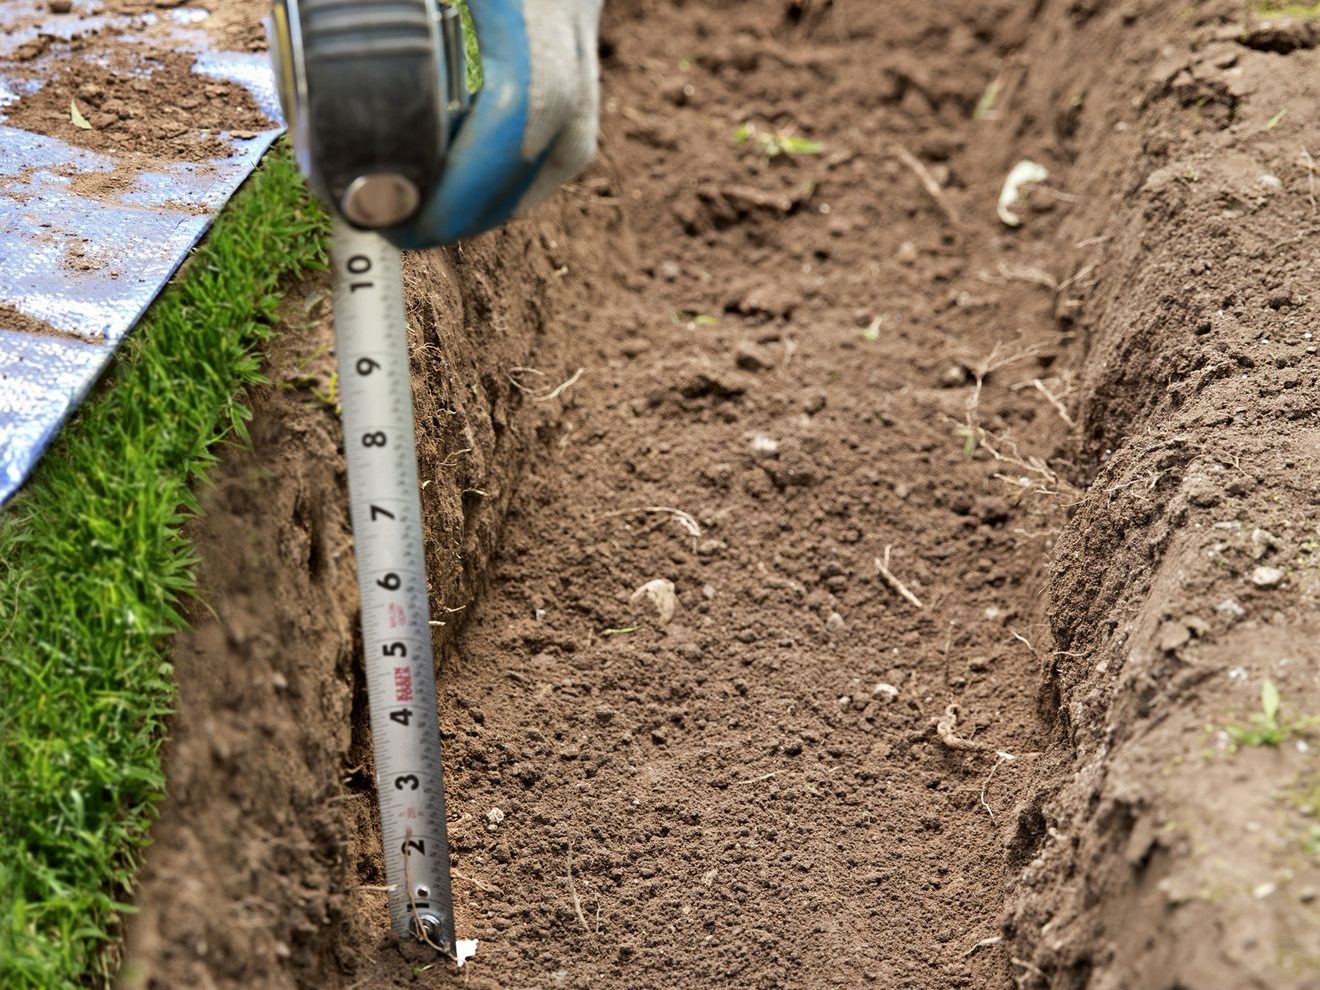 Mesuring the soil Depth Eco landscape supply edited